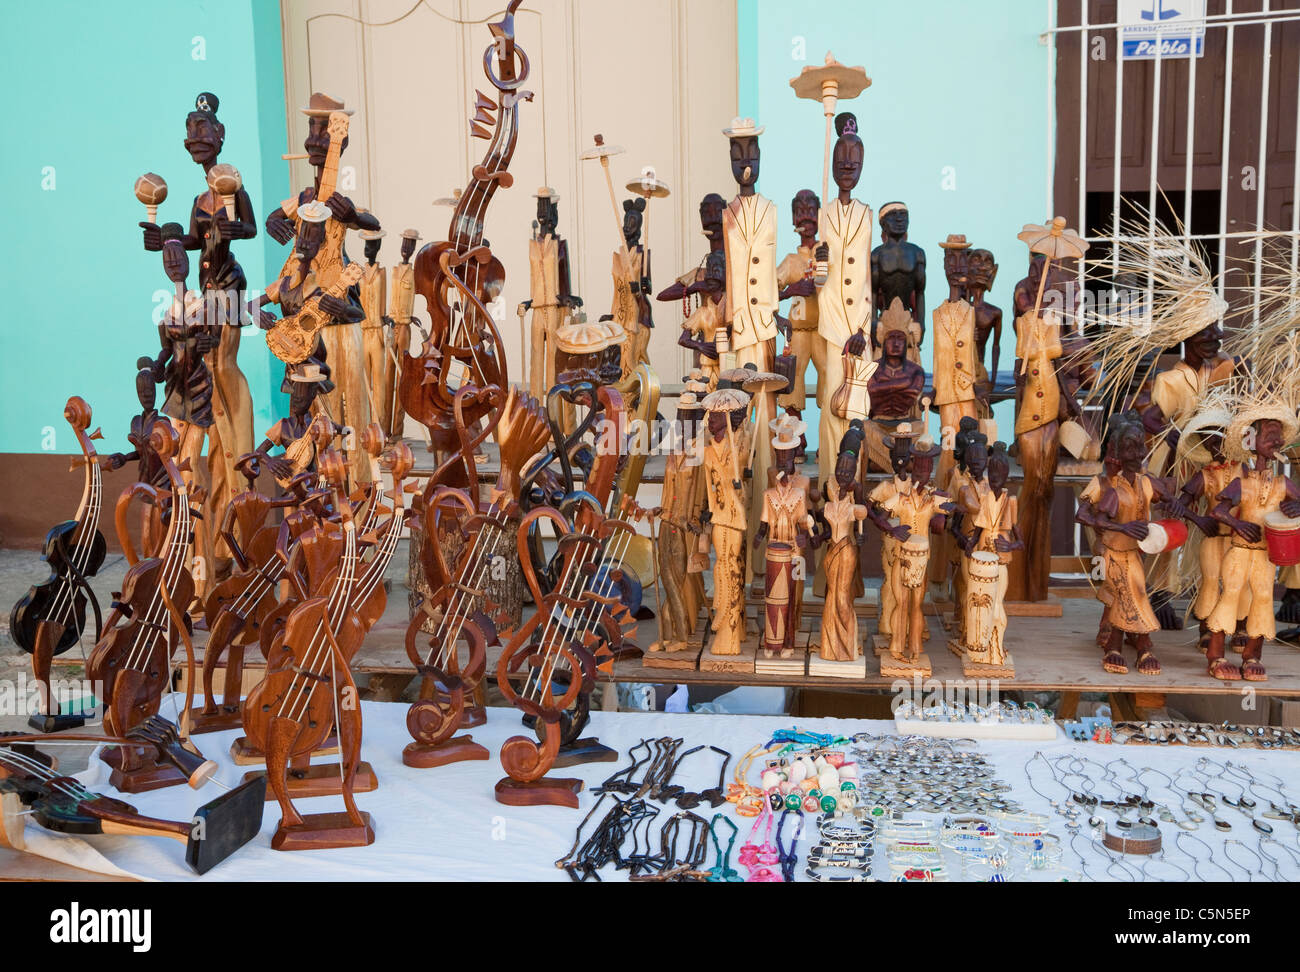 Cuba, Trinidad. Wood Carvings in Handicrafts Market. Stock Photo